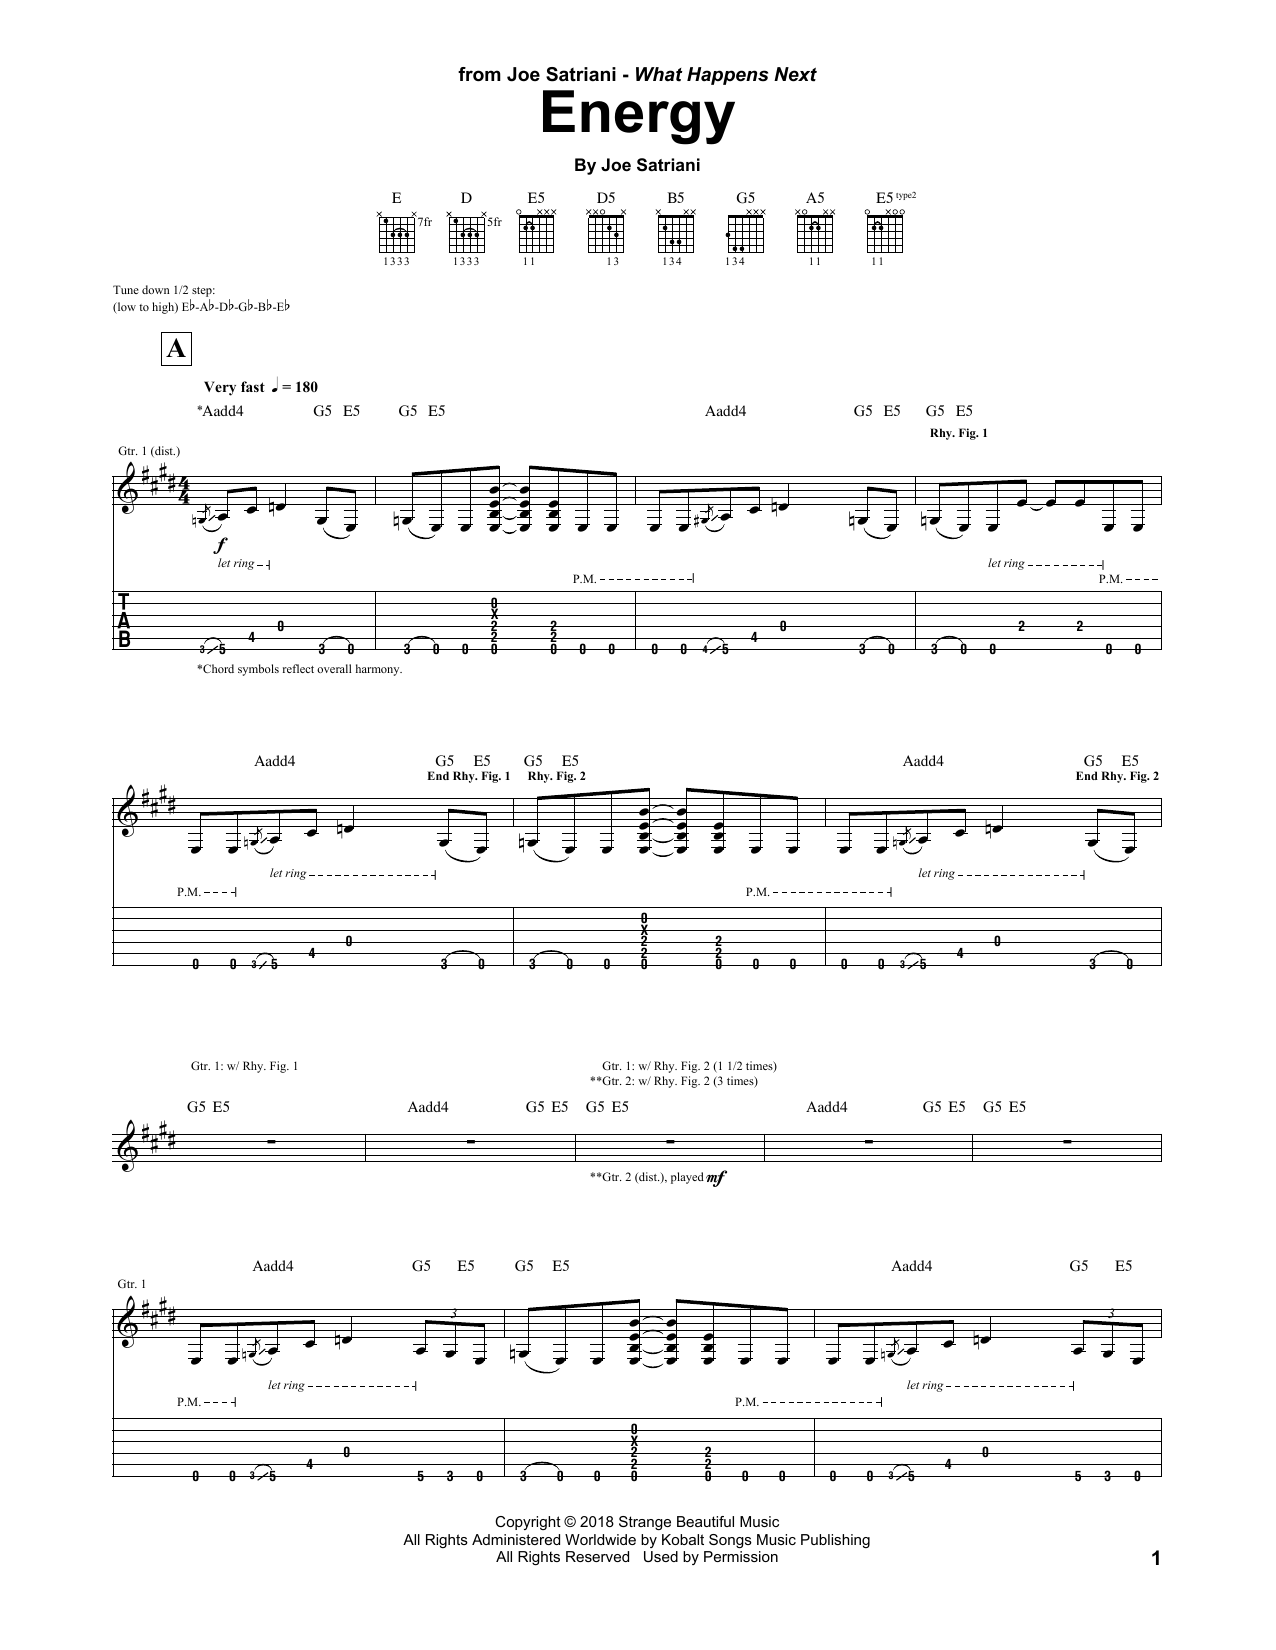 Joe Satriani Energy Sheet Music Notes & Chords for Guitar Tab - Download or Print PDF